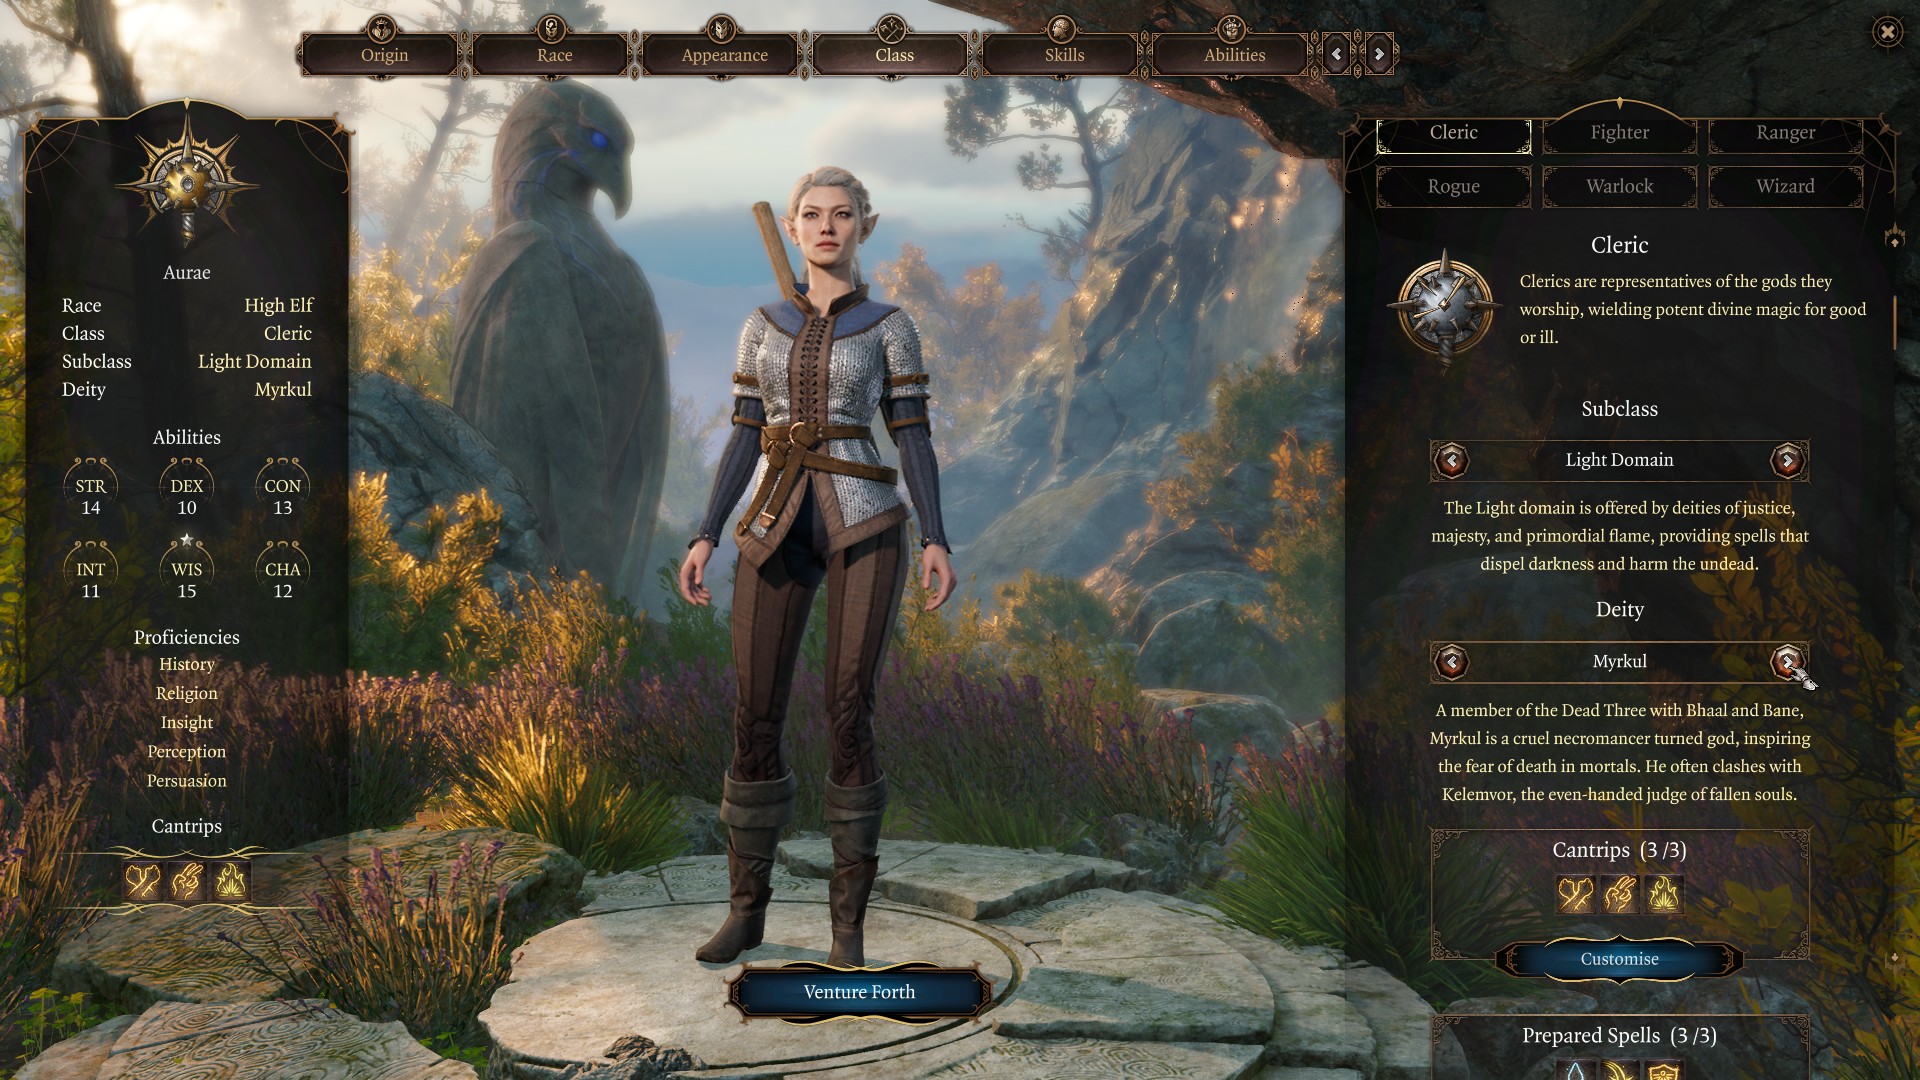 Baldur's Gate 3 classes: A High-Elf Cleric on the character creation screen.